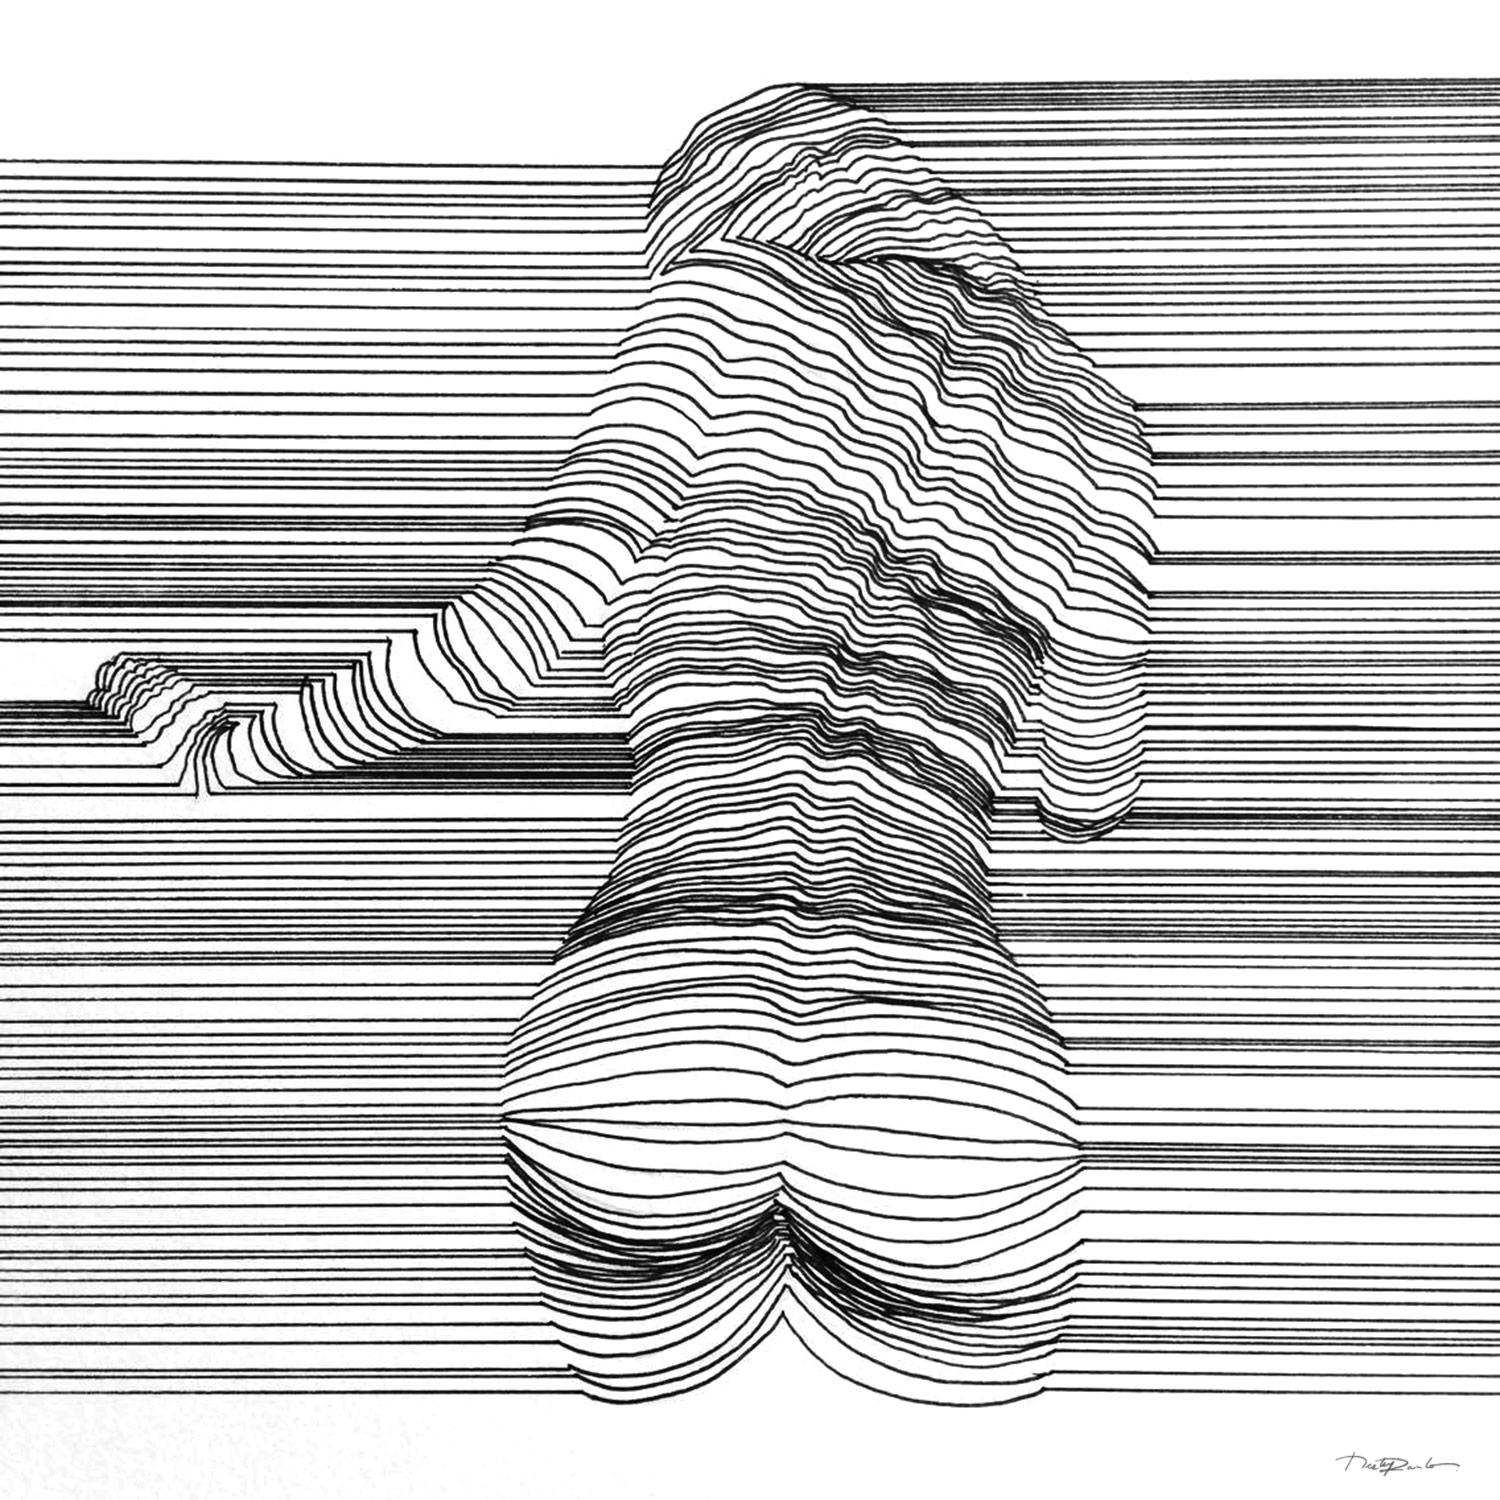 Sensual 3D Line Art by Nester Formentera.